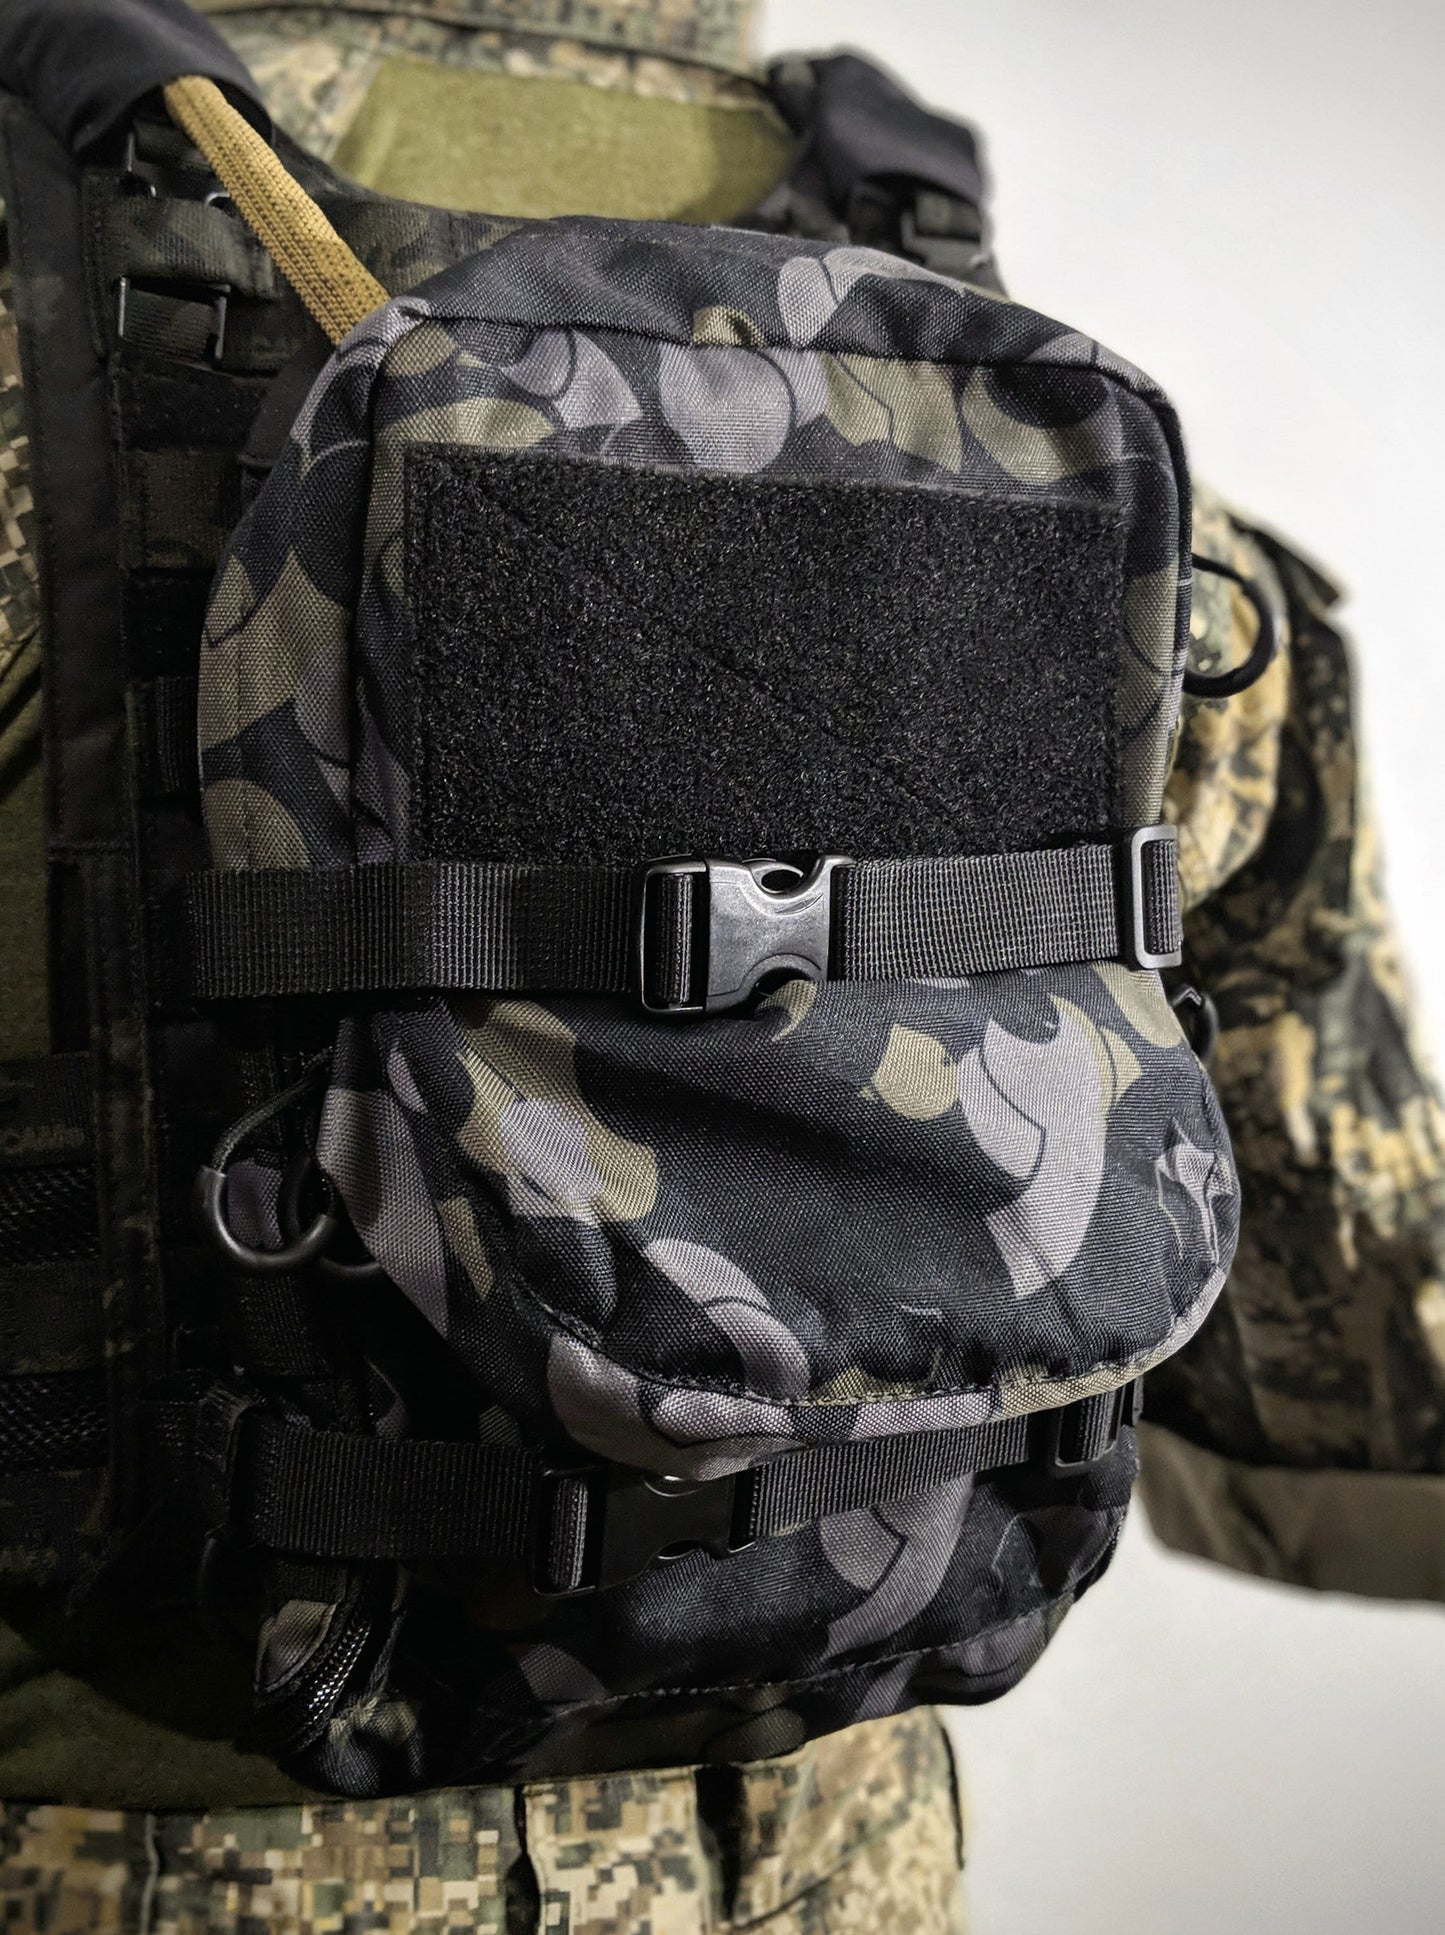 Pecker Pack - Black Tactical Backpack Minimap Multicam Black Inspired Humor Novelty Airsoft Gift Idea